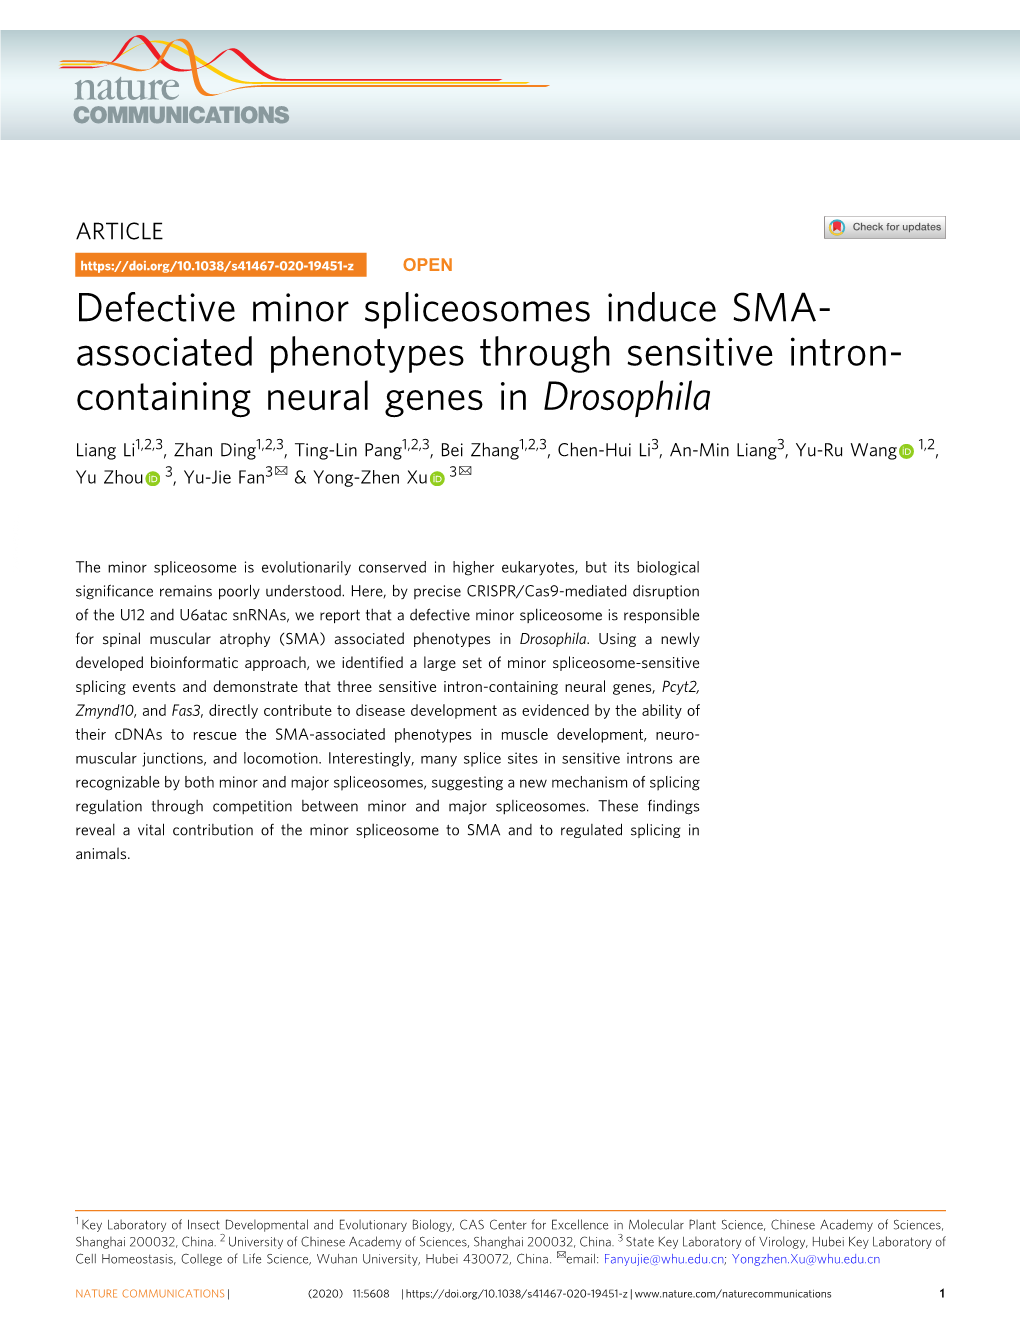 Defective Minor Spliceosomes Induce SMA-Associated Phenotypes